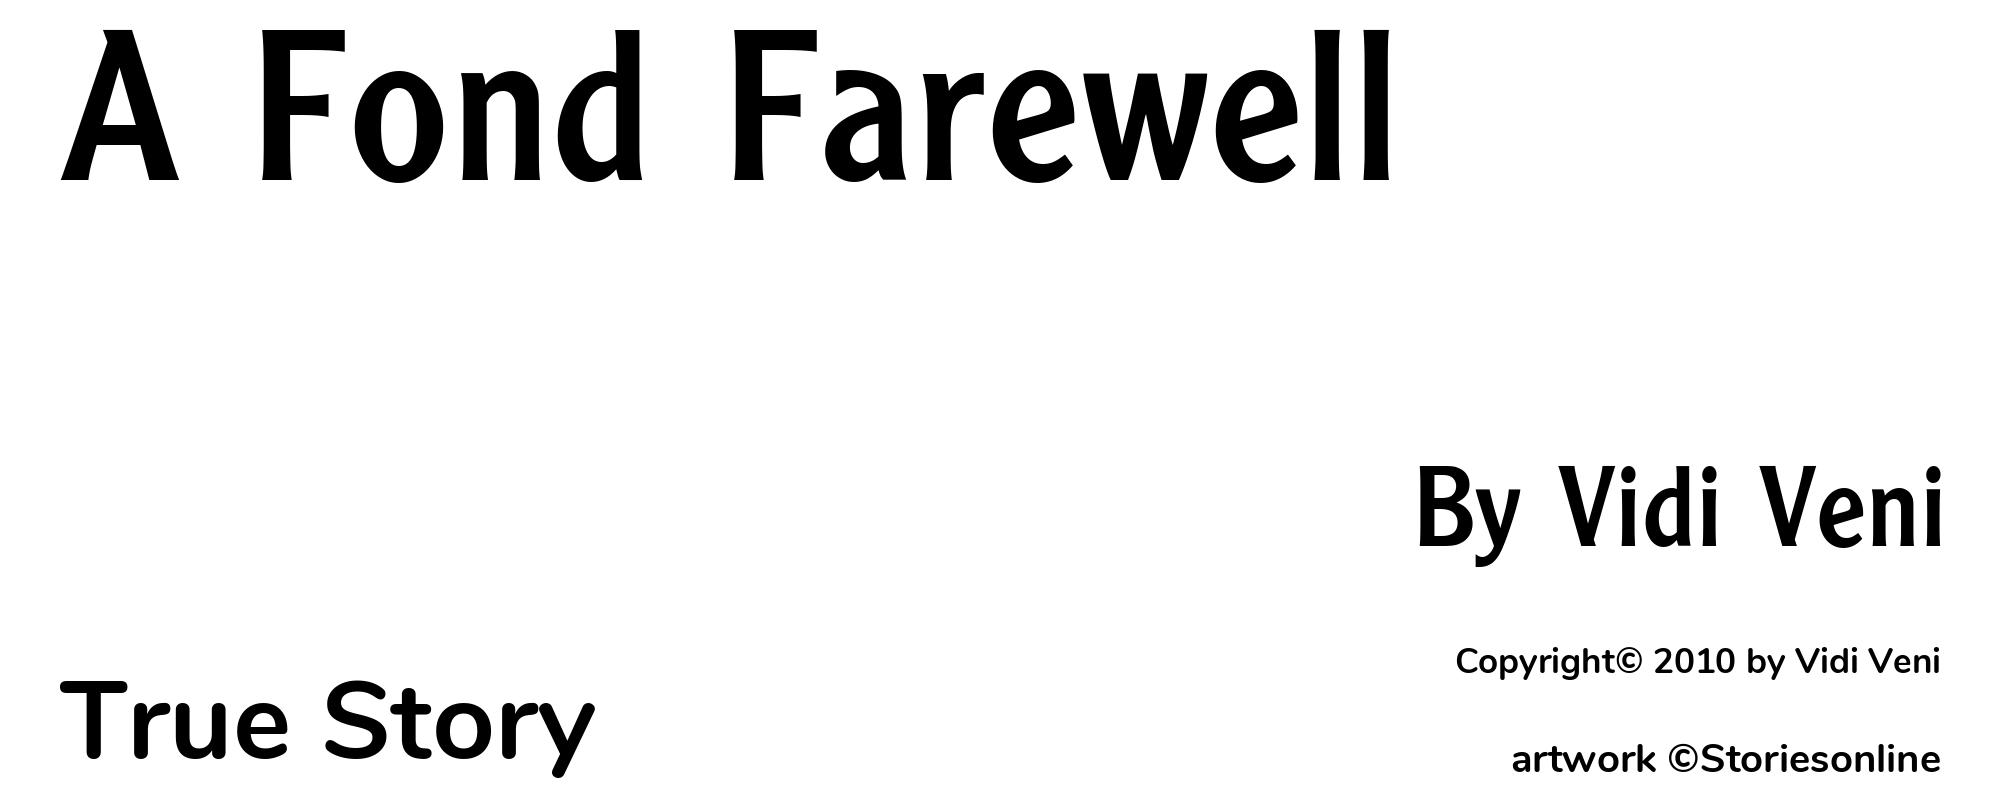 A Fond Farewell - Cover